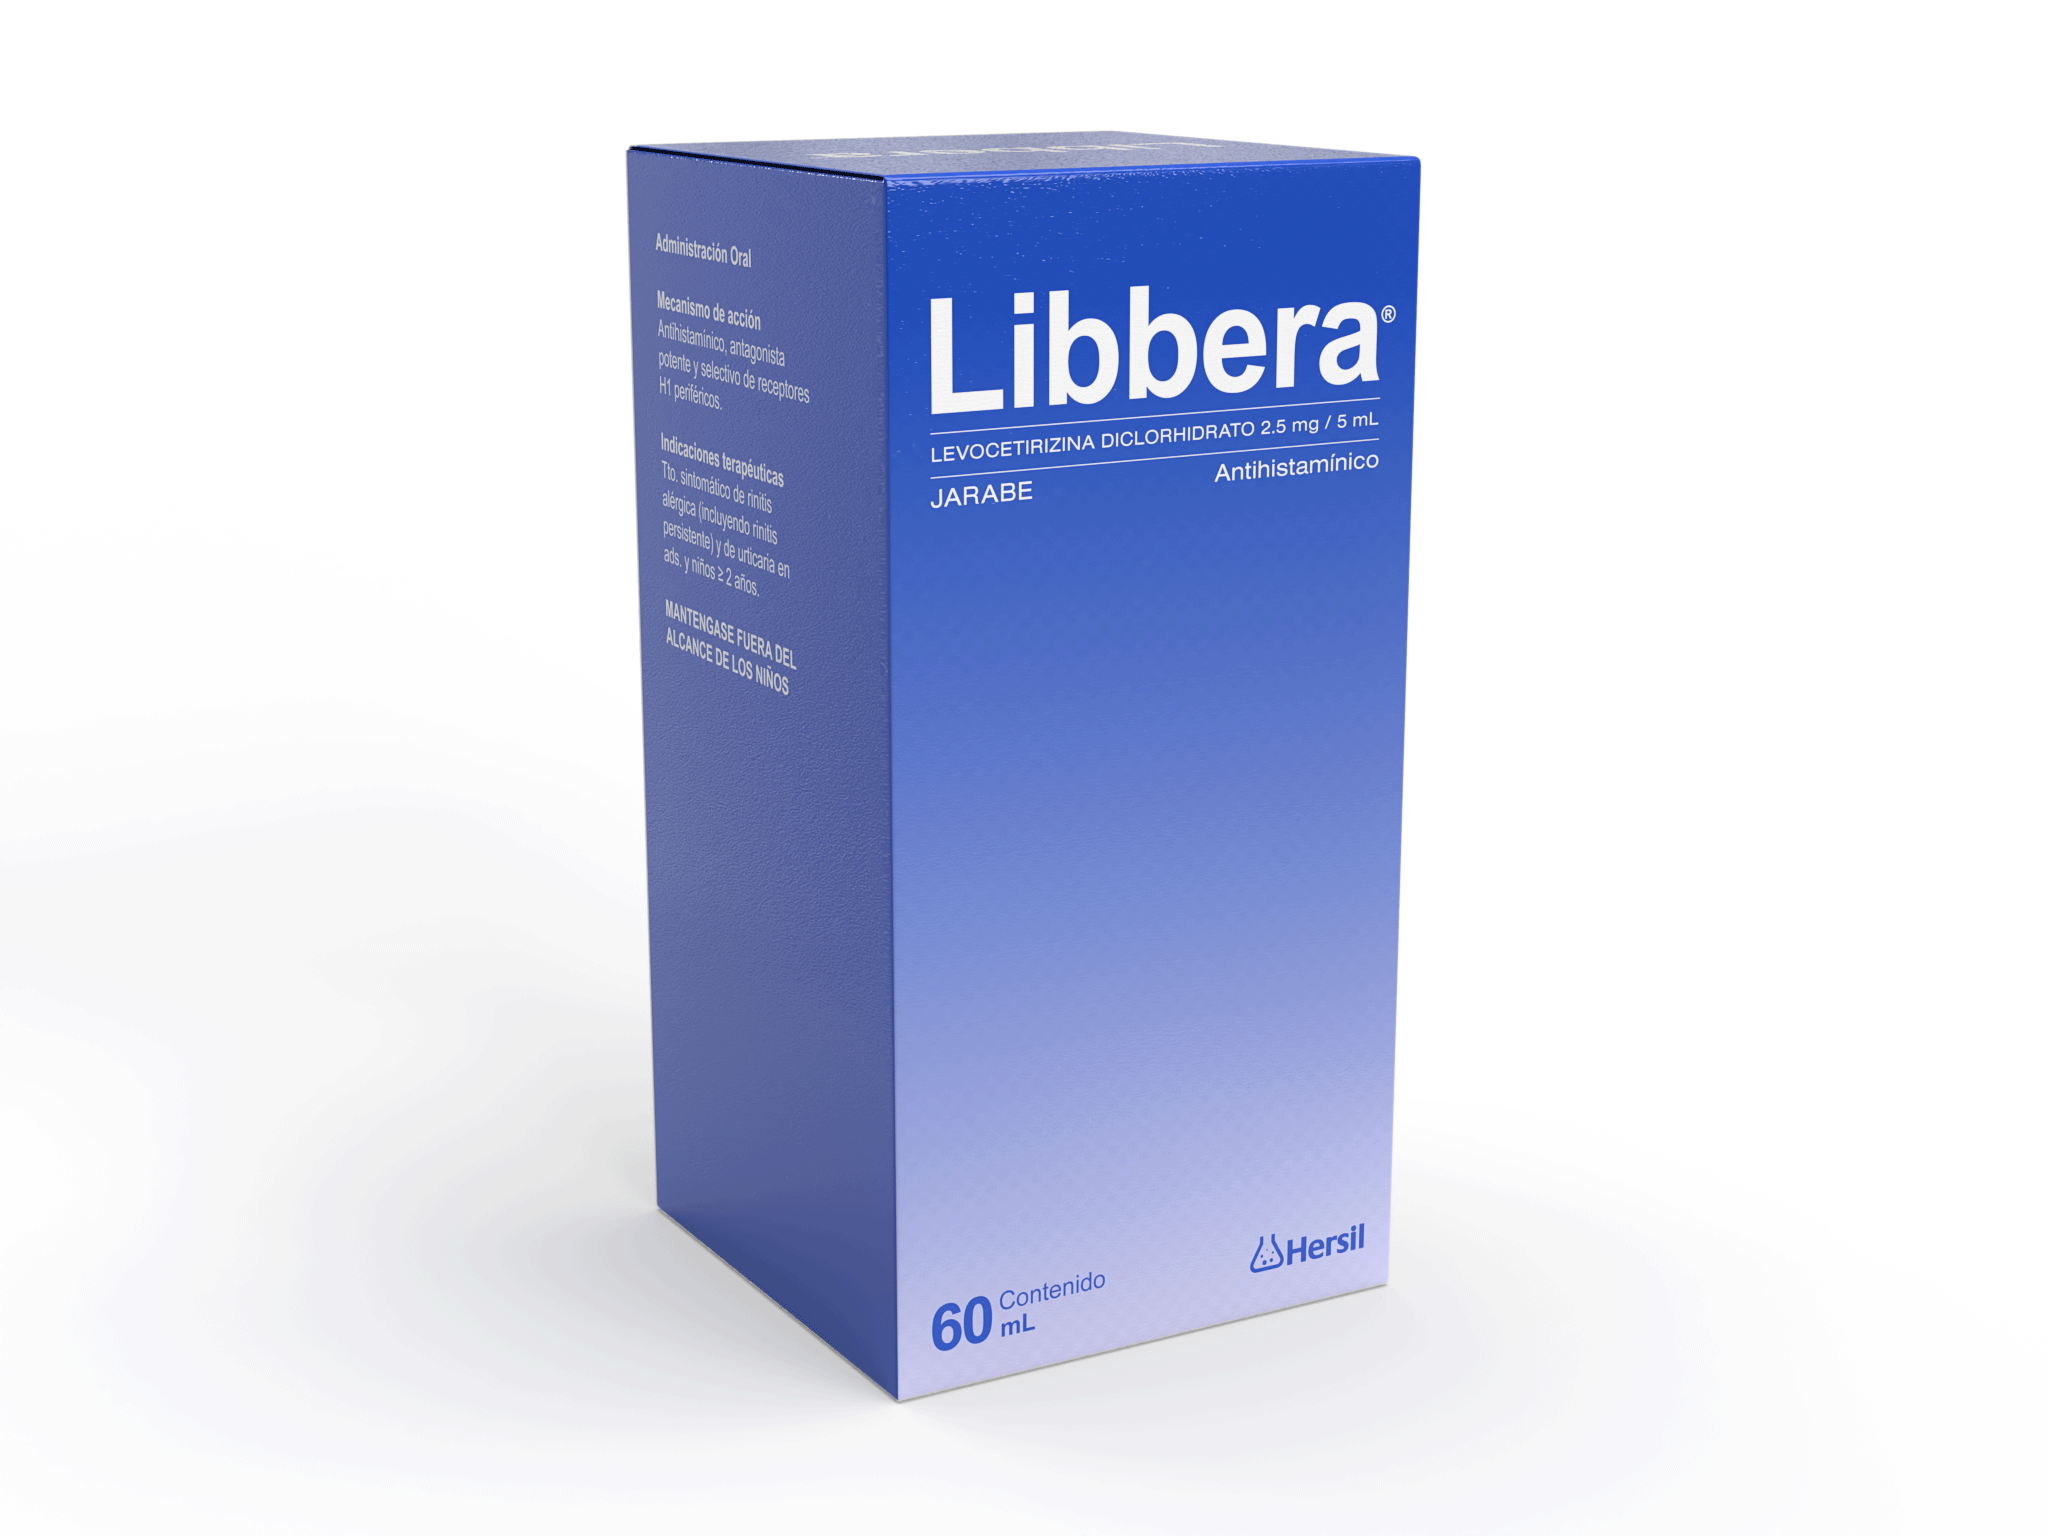 Libbera® Oral solution